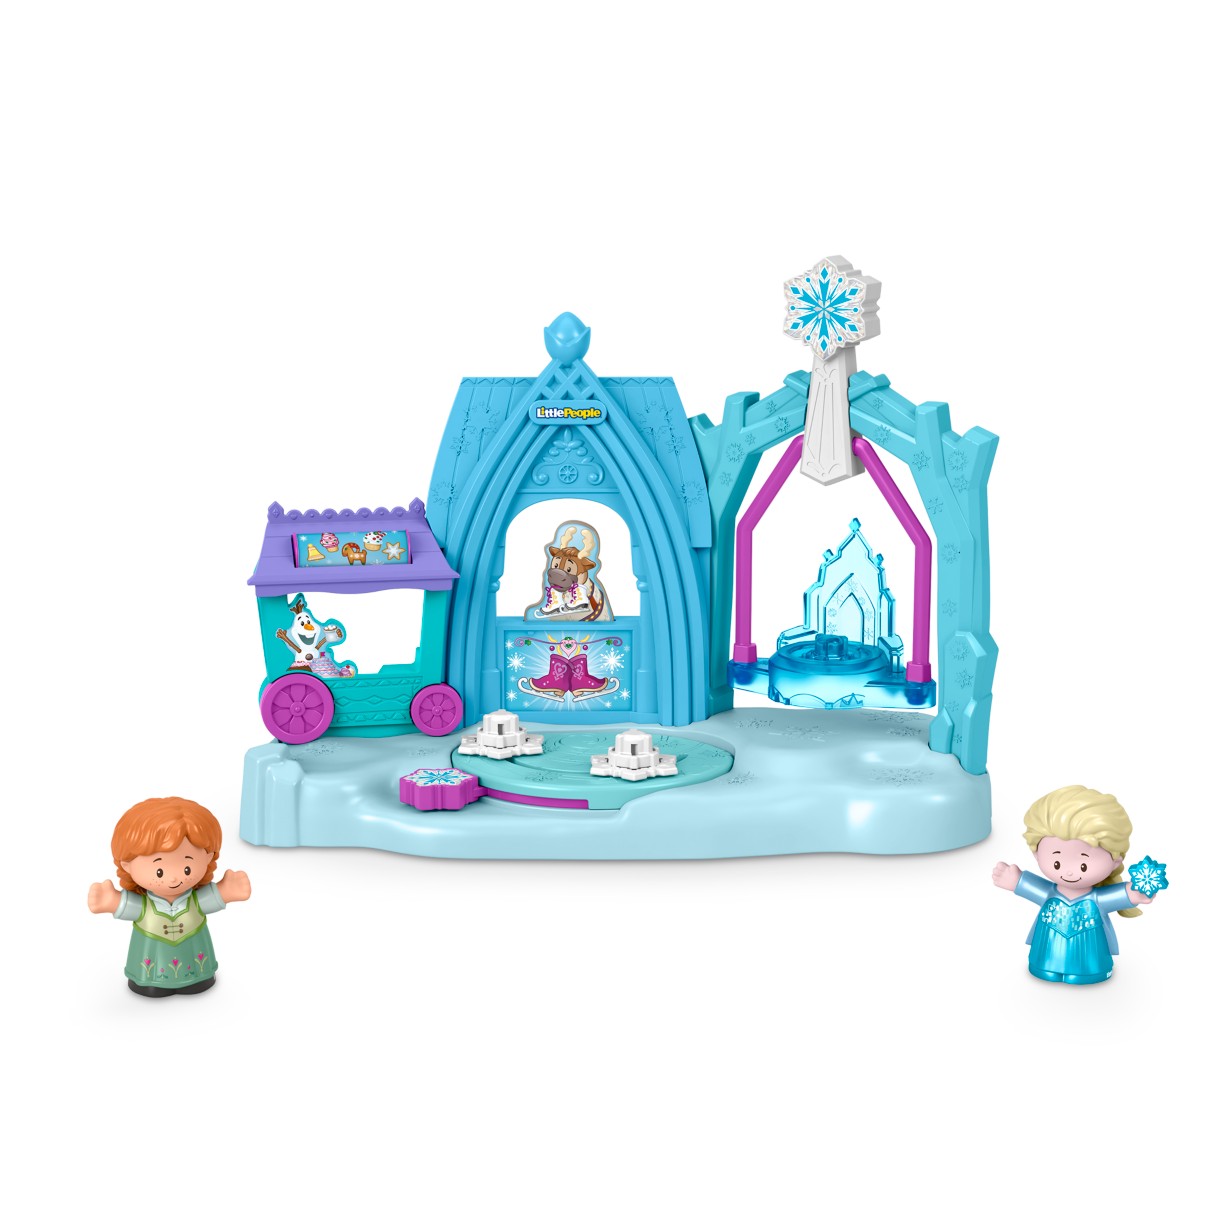 Arendelle Winter Wonderland Play Set by Little People – Frozen